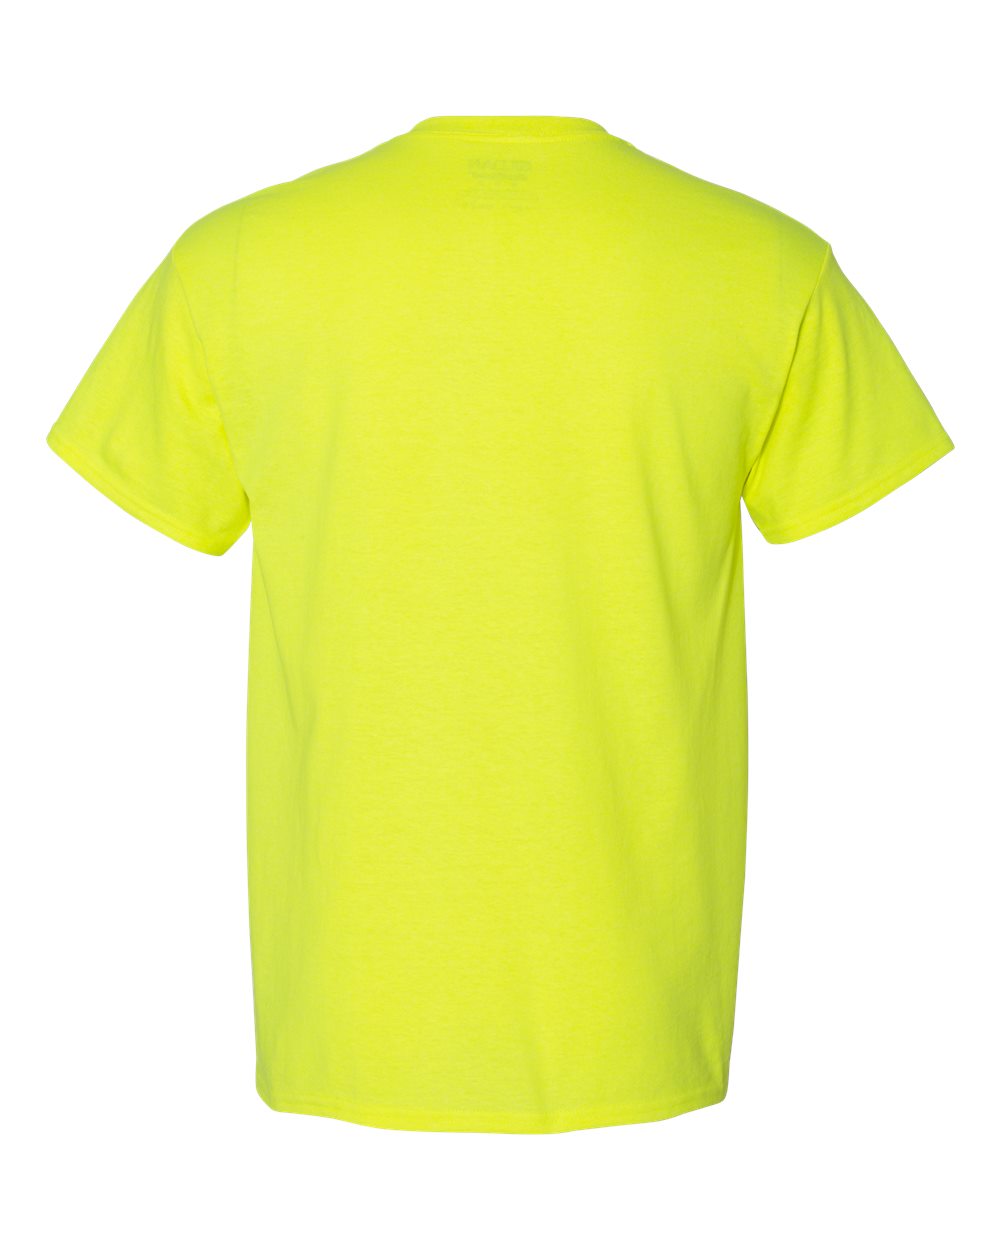 Wholesale Gildan 8300 | Buy DryBlend 50/50 T-Shirt with a Pocket ...